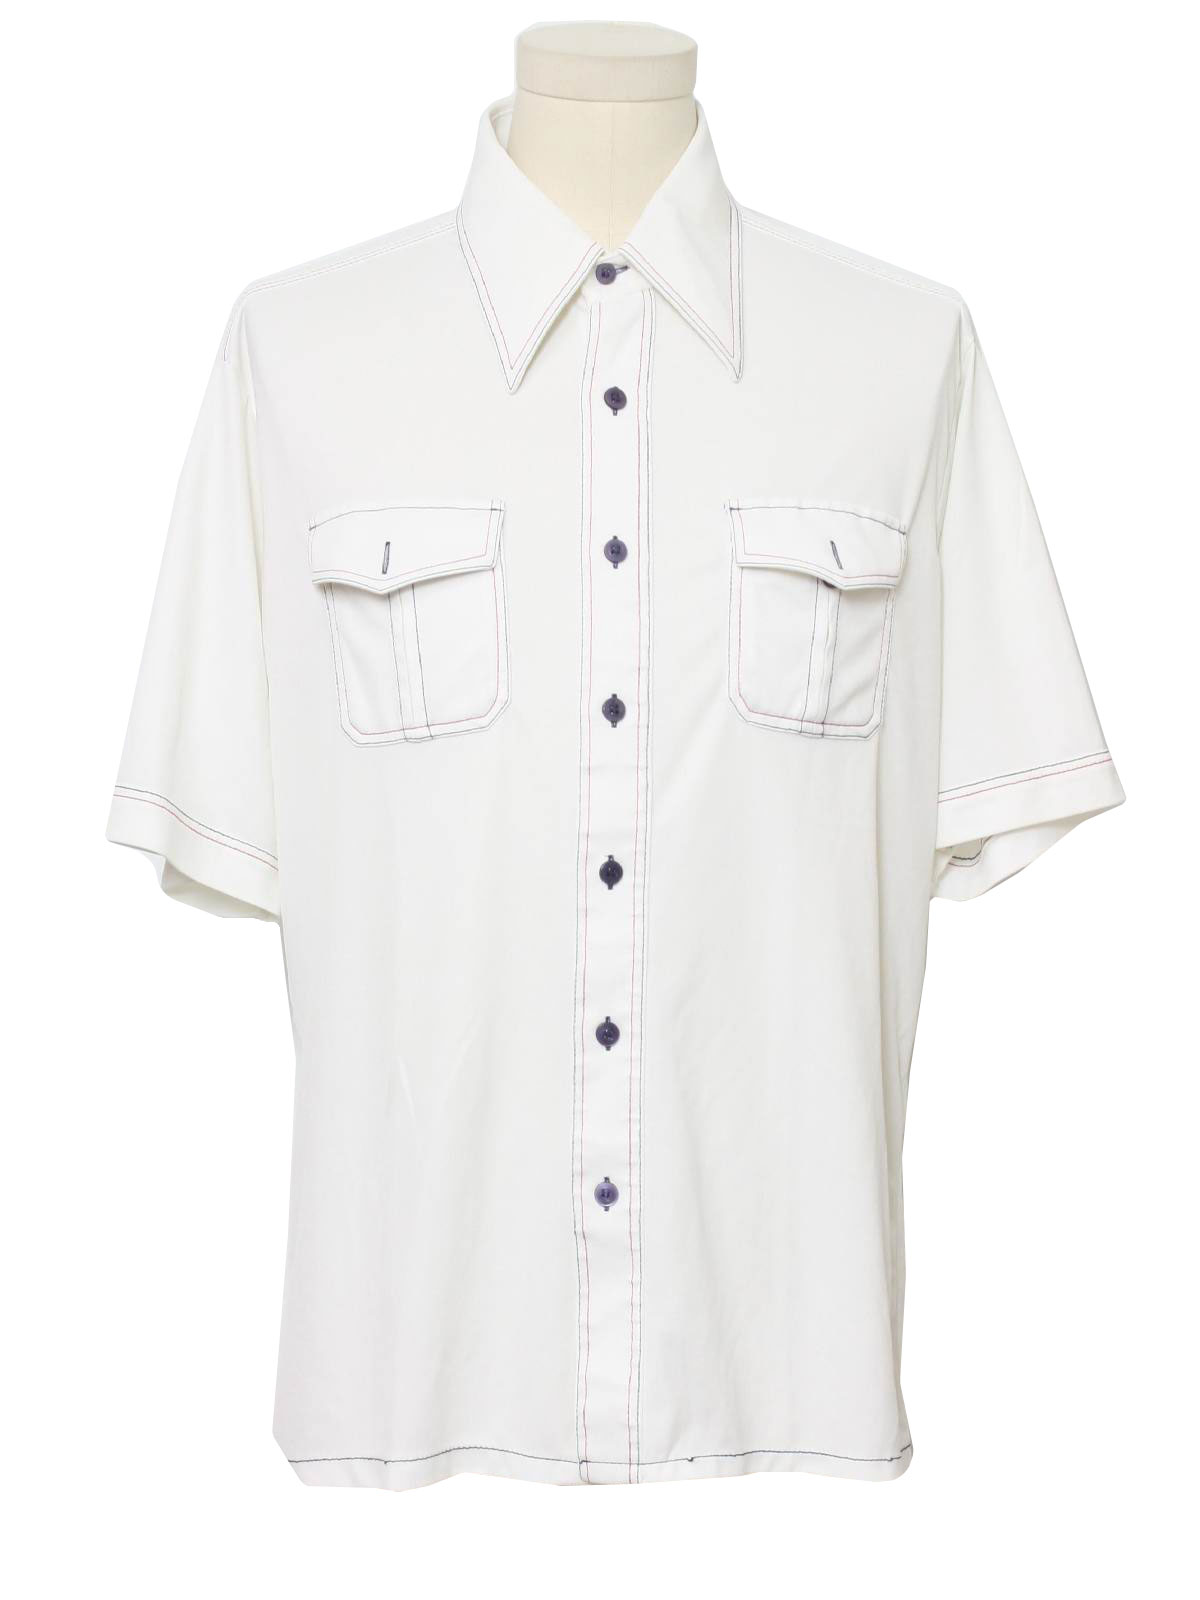 Retro 70's Shirt: 70s -JCPenney- Mens white background polyester short ...